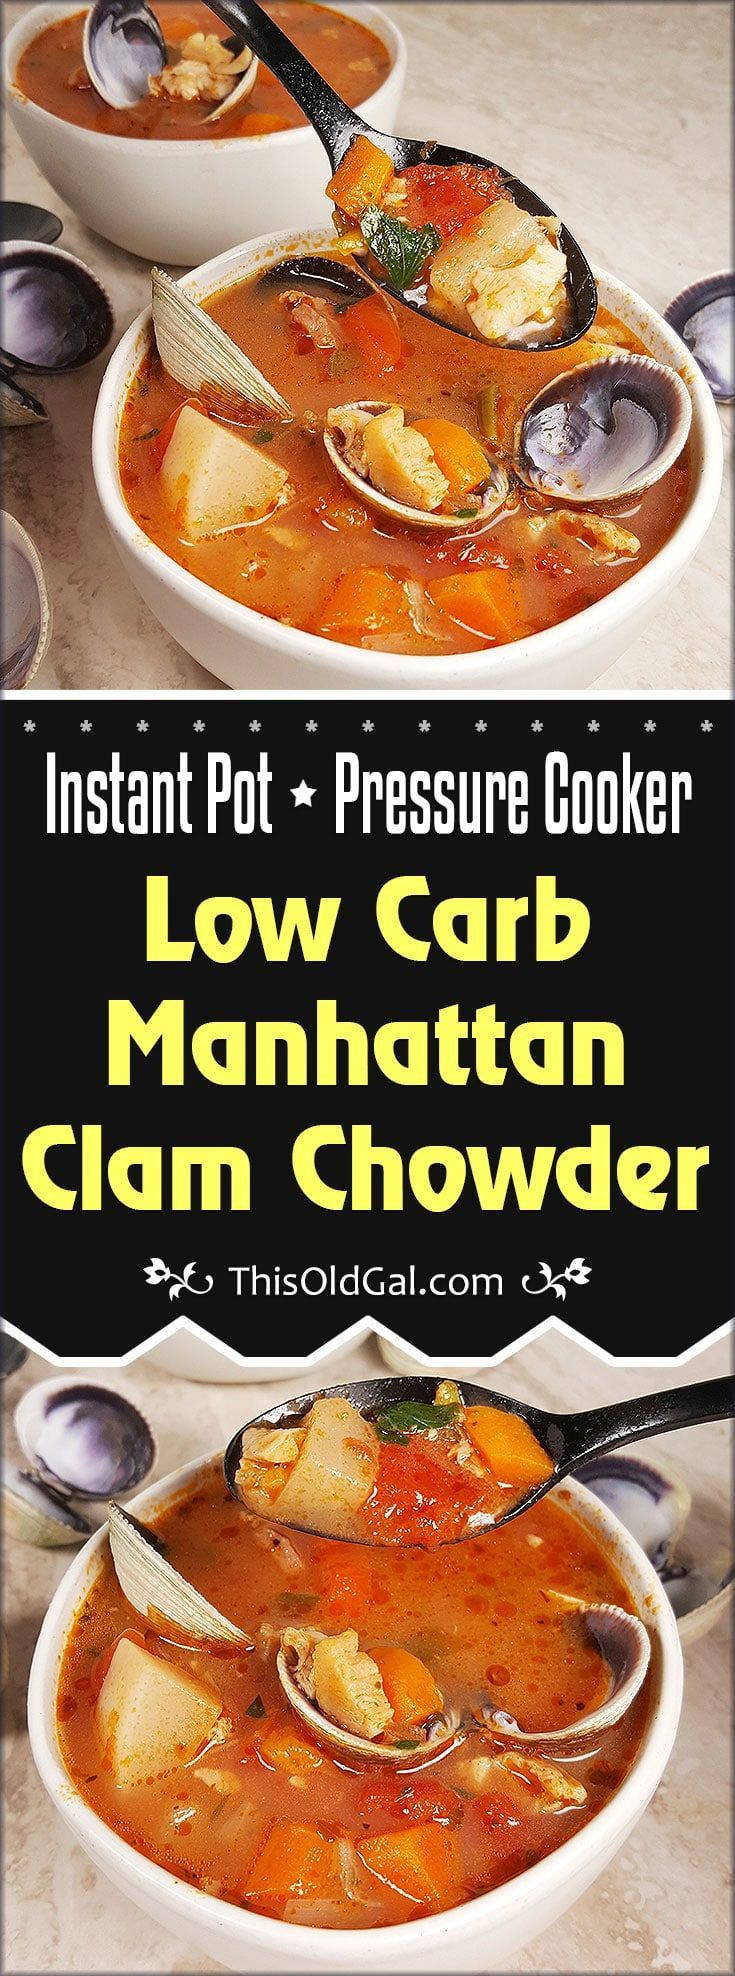 Low Calorie Pressure Cooker Recipes
 Instant Pot Pressure Cooker Low Carb Manhattan Clam